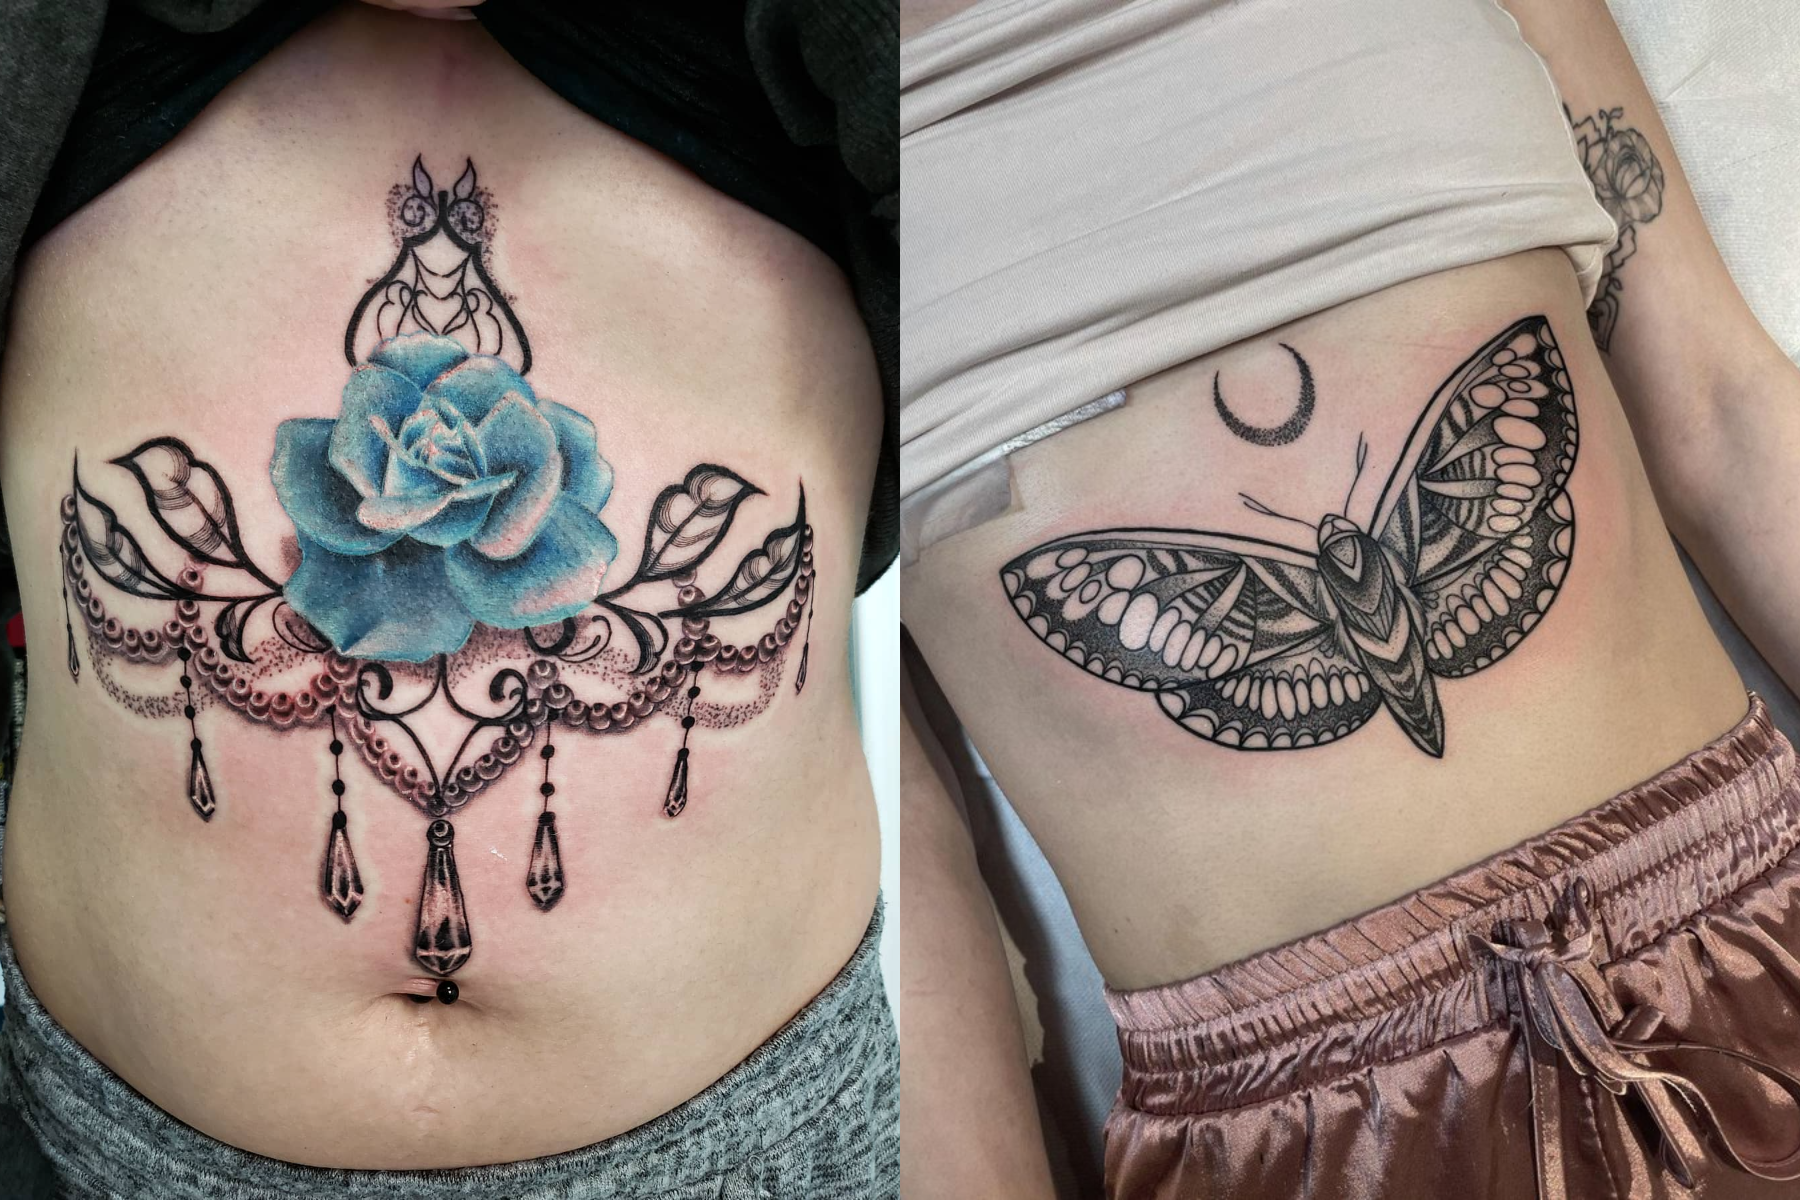 Ladies showcasing upper stomach tattoos